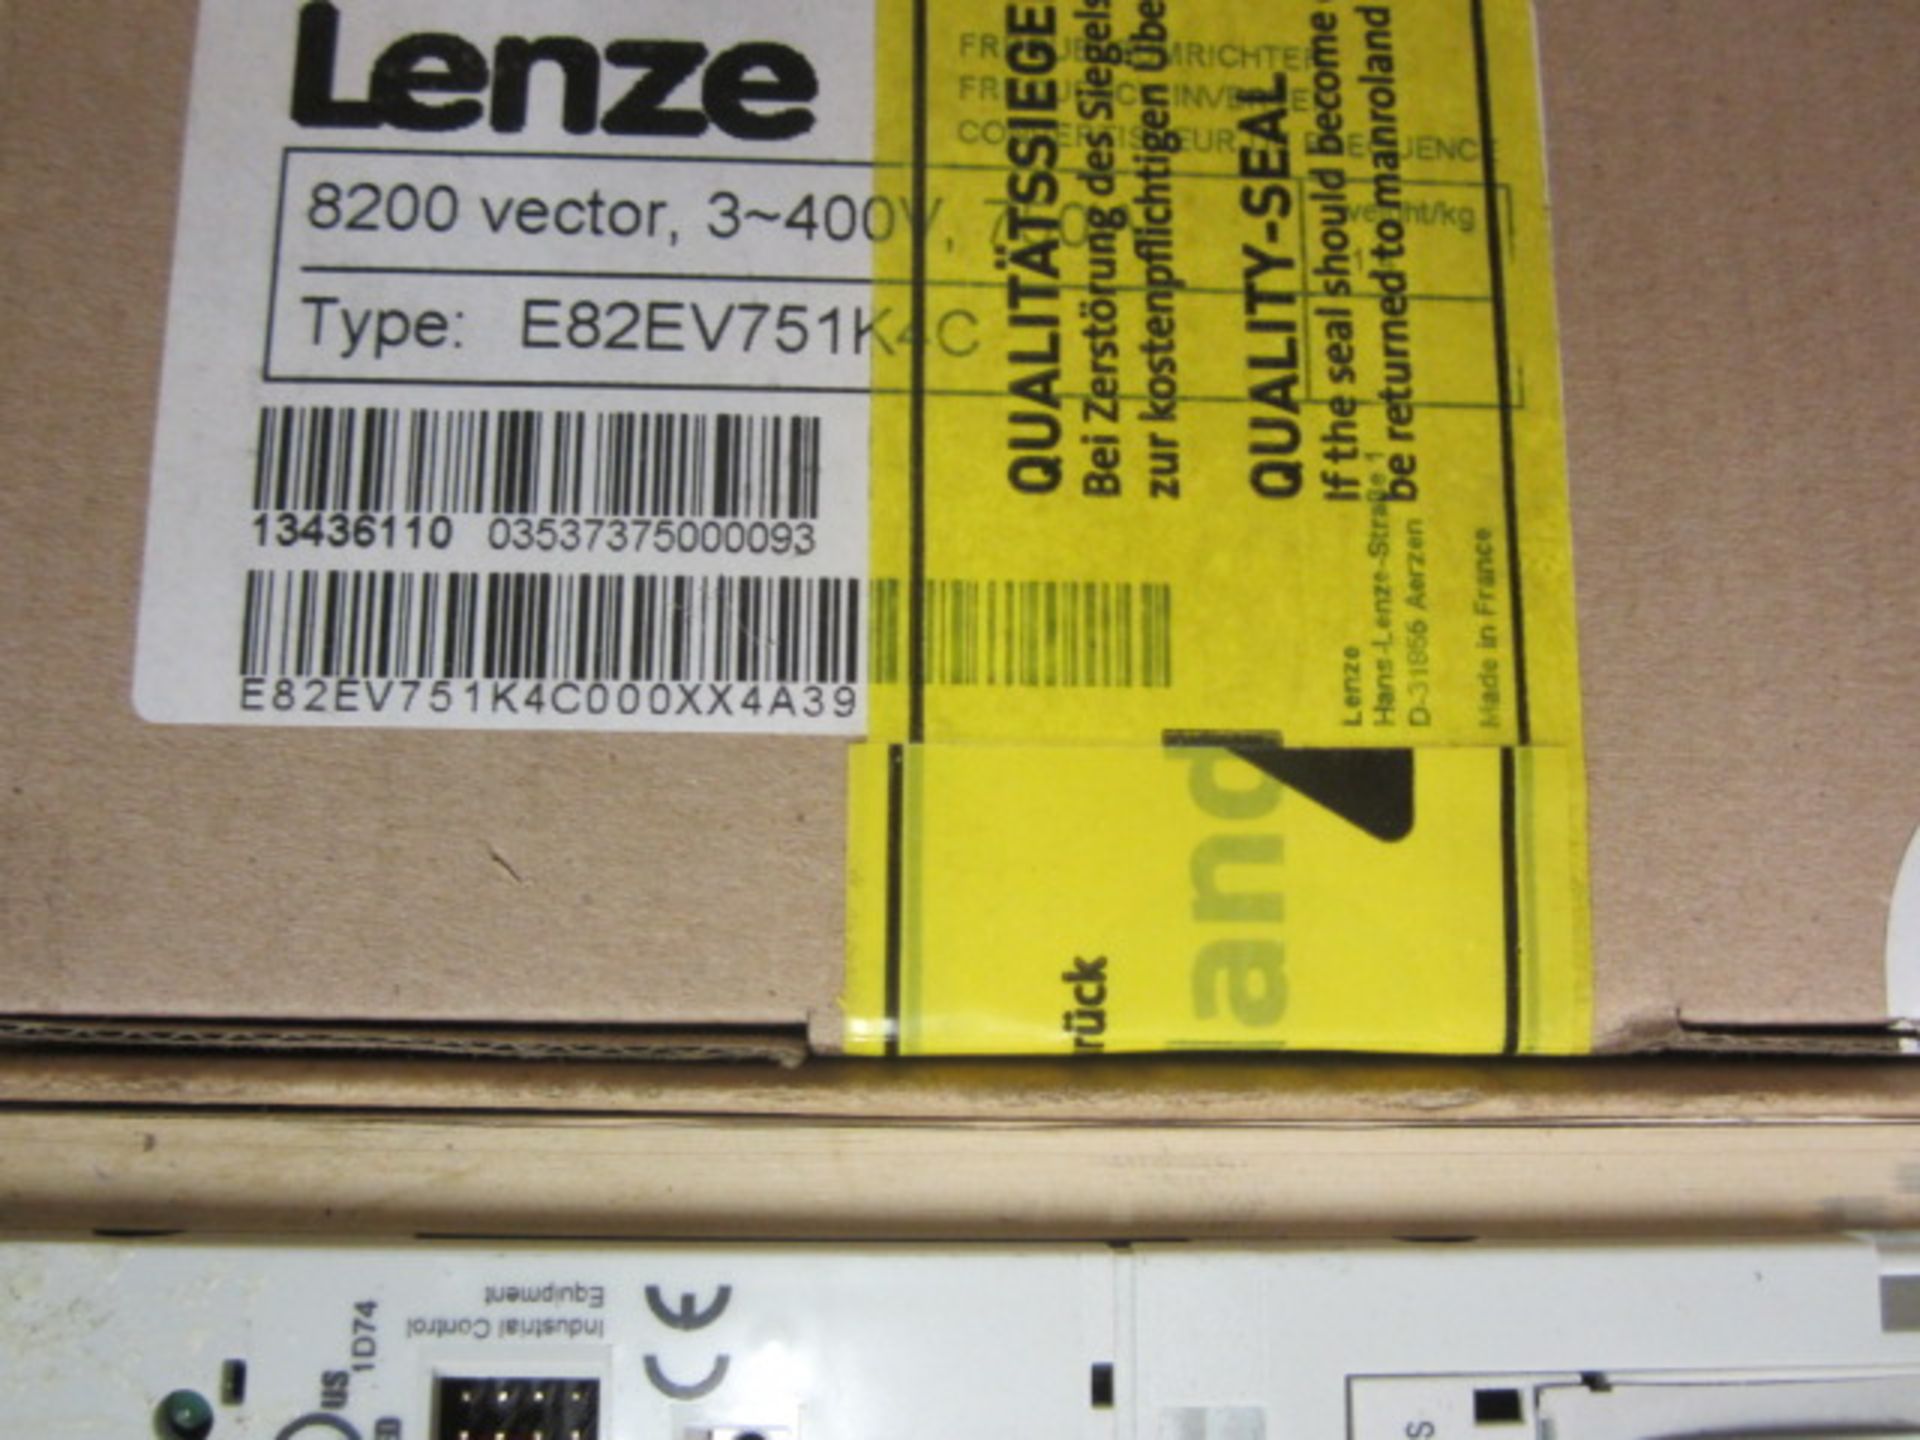 Lenze 8200 Vector invertor, 2 x Lenze drive motors - Image 2 of 4